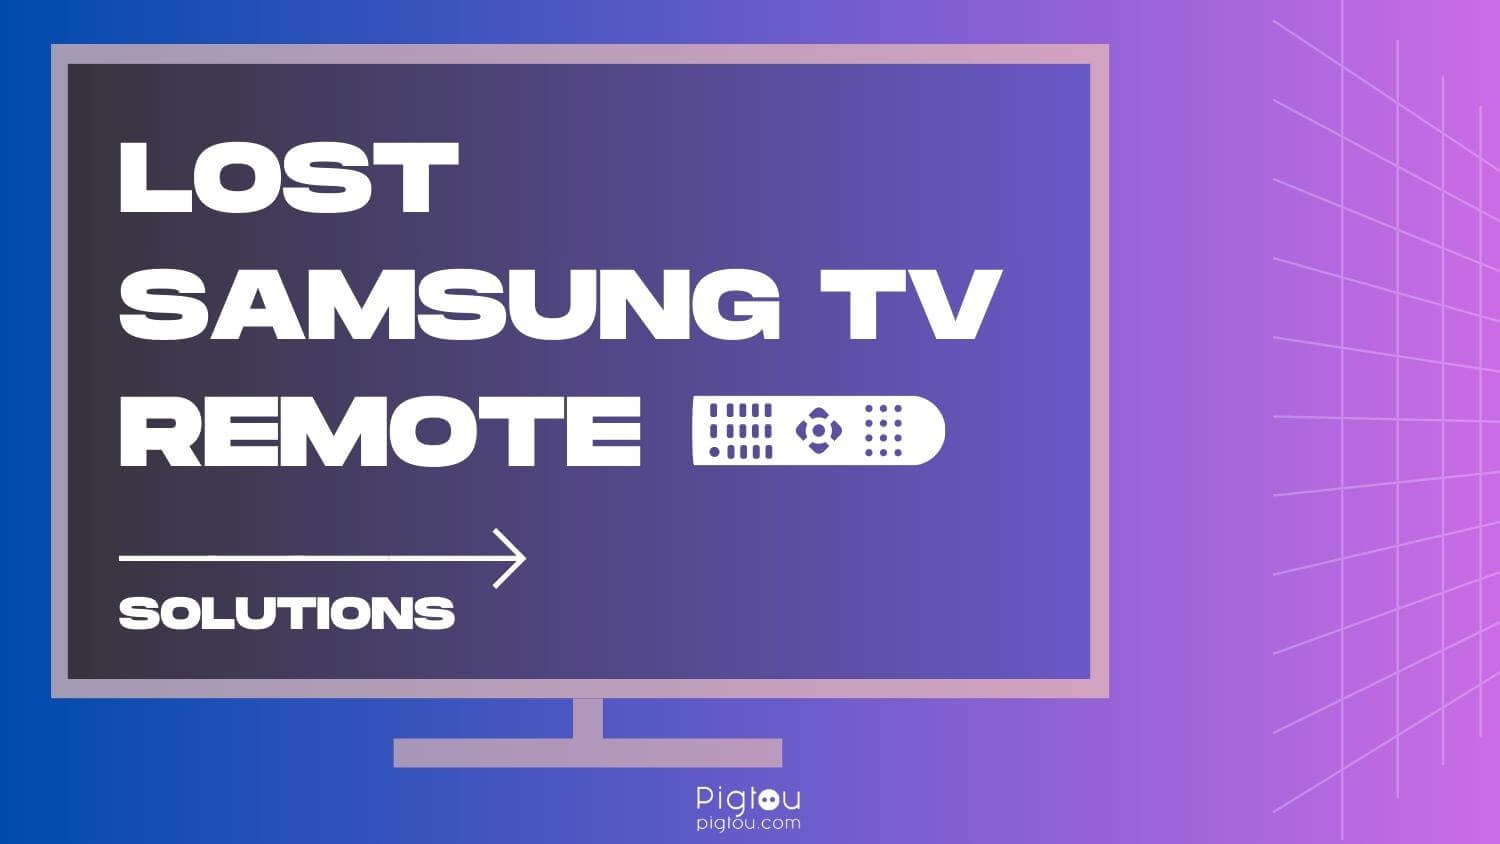 Lost Samsung TV Remote